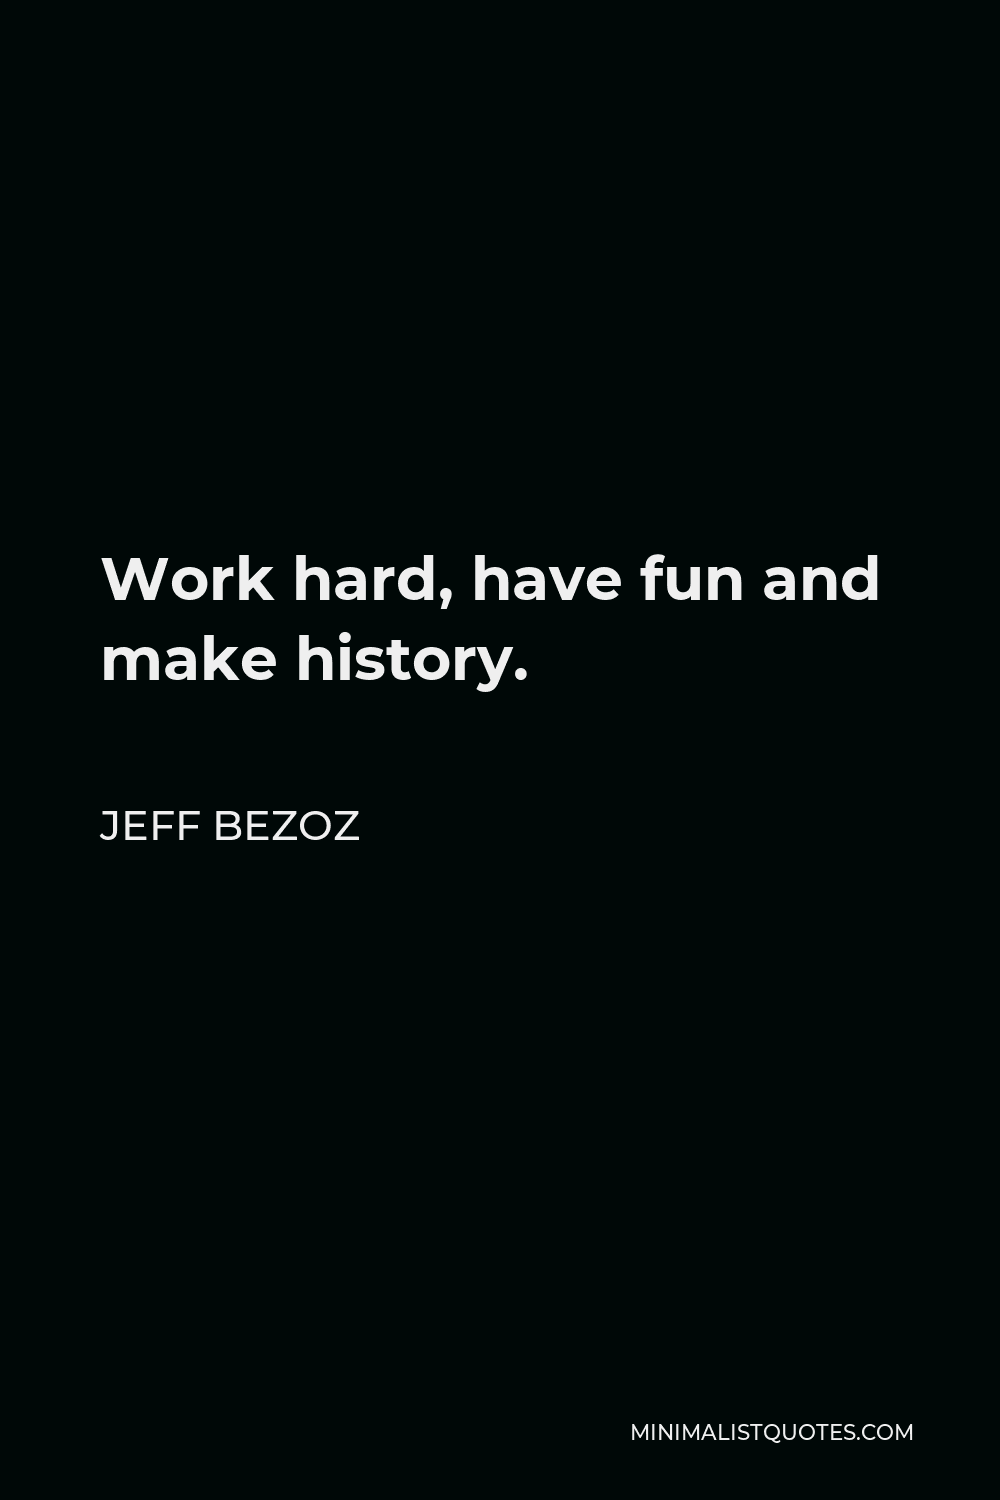 Jeff Bezoz Quote - Work hard, have fun and make history.